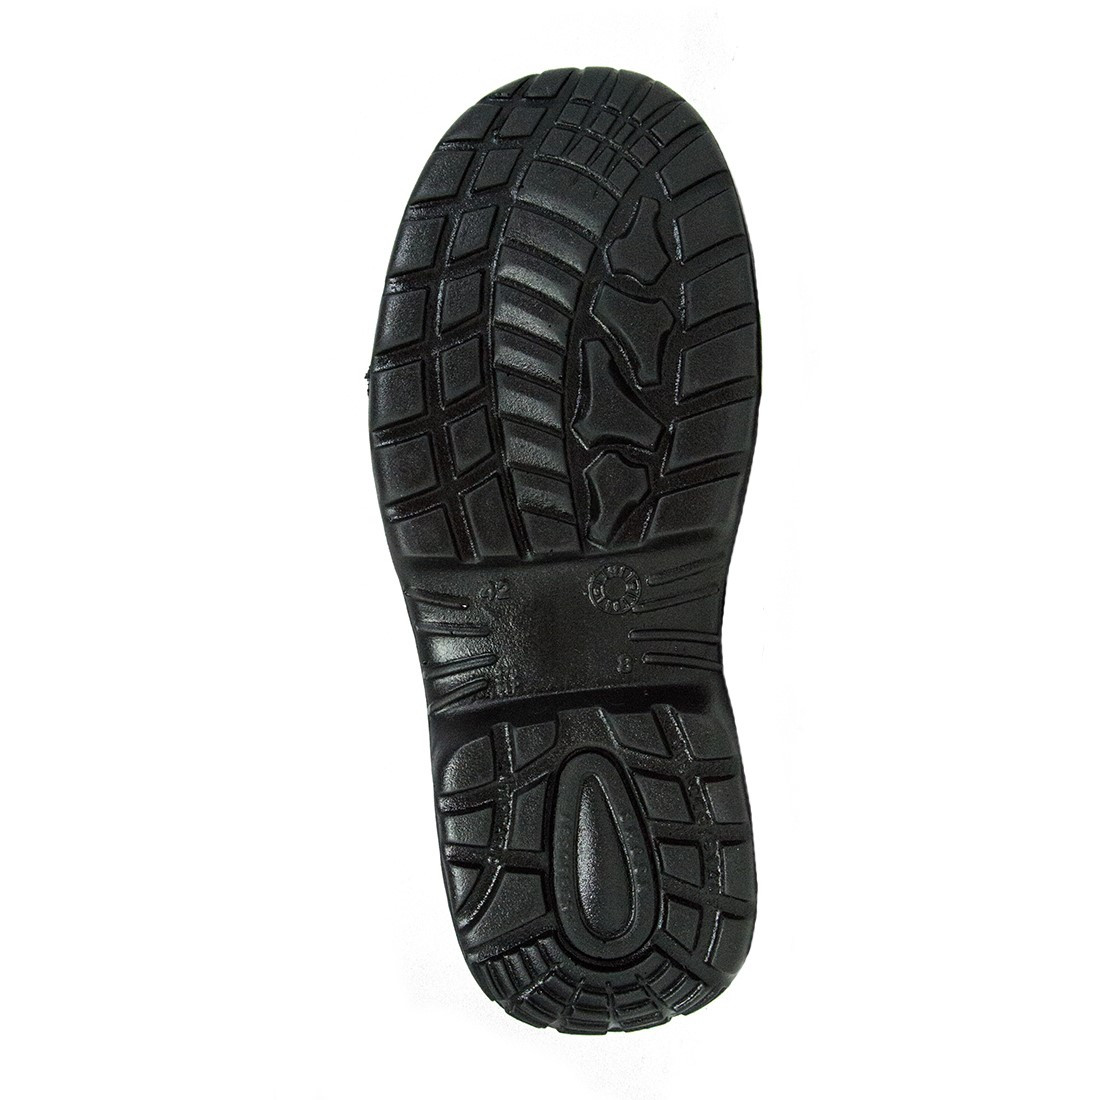 Pantofi Garribaldi S1P SRC - Incaltaminte de protectie | Bocanci, Pantofi, Sandale, Cizme